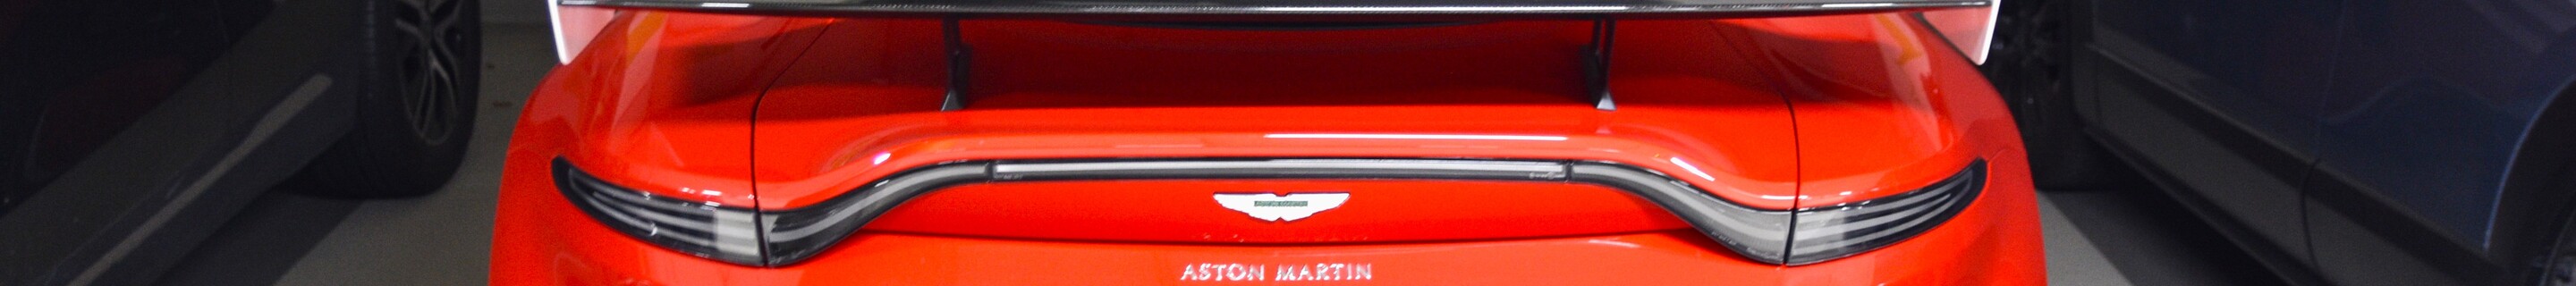 Aston Martin V8 Vantage 2018 Heritage Racing Edition